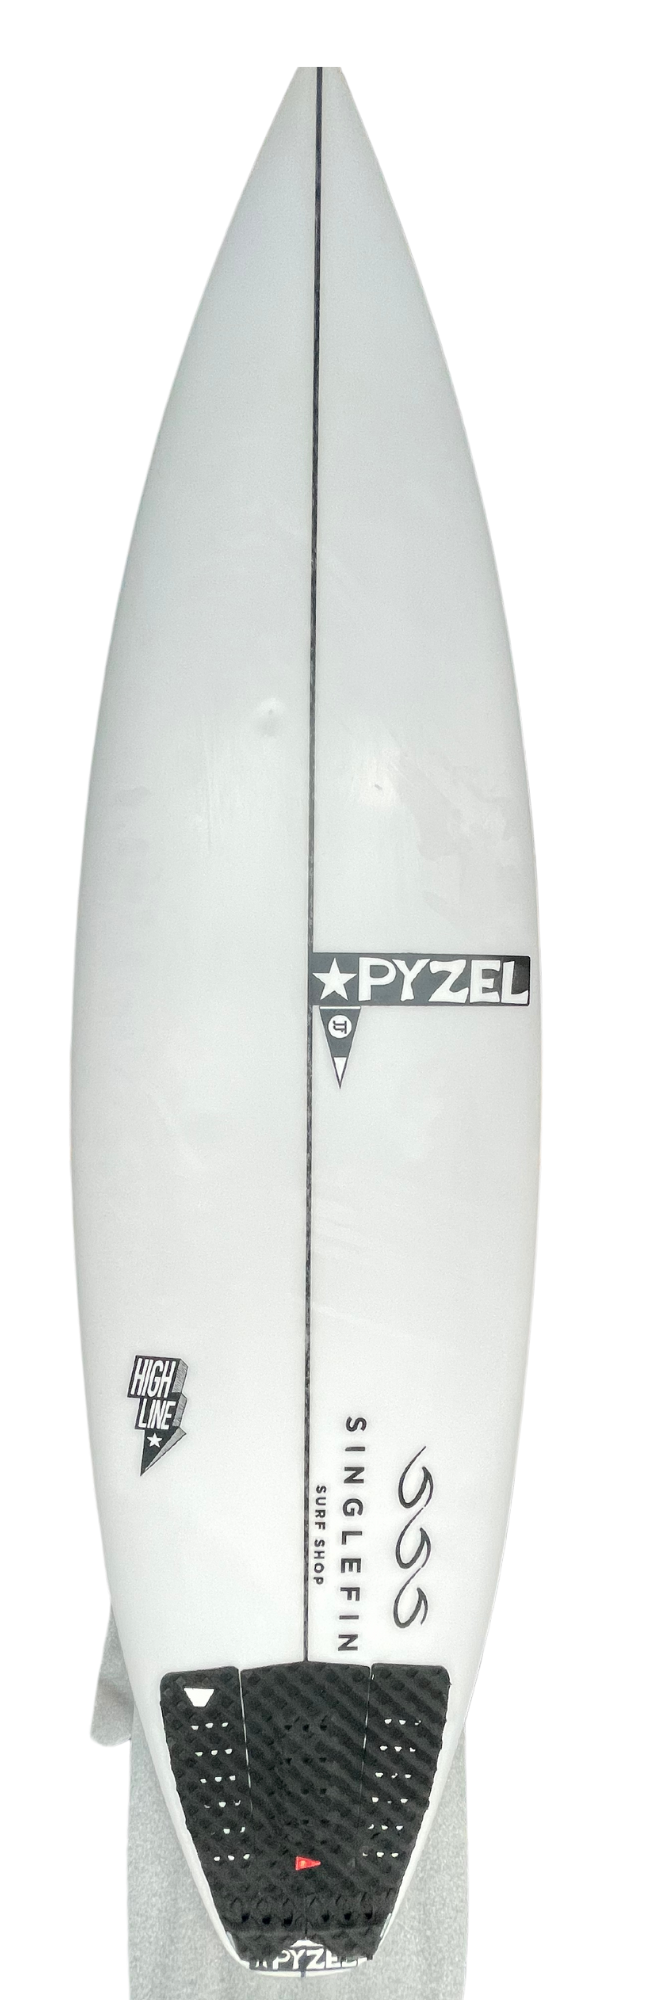 planche de surf Pyzel HighLine 5'11 - 27lts Karim